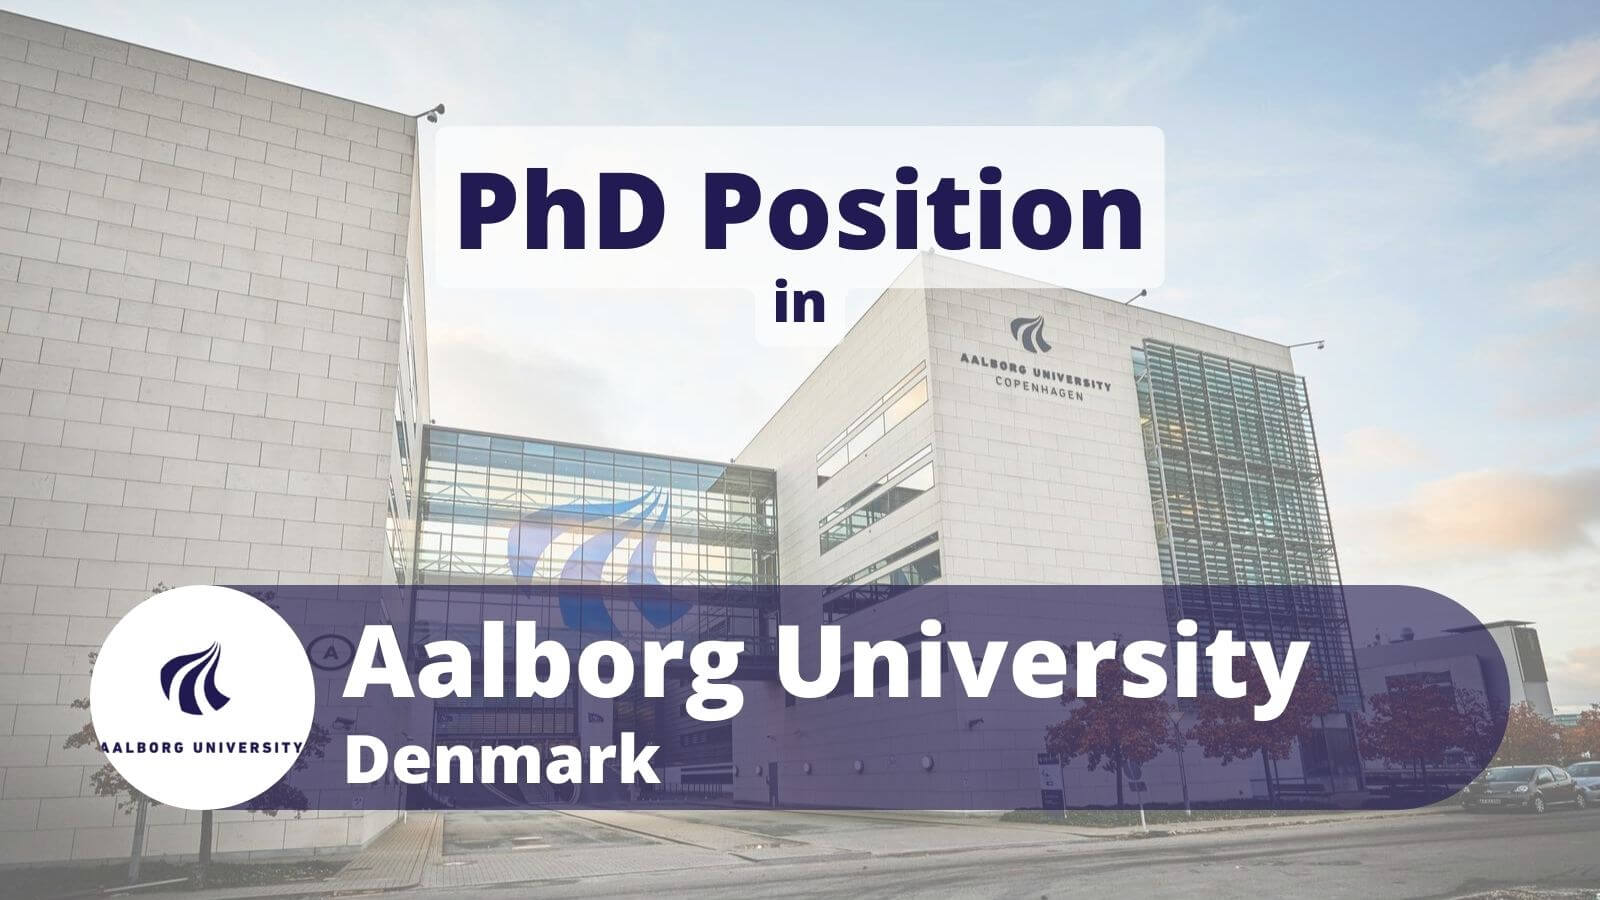 PhD Position in Aalborg University Denmark